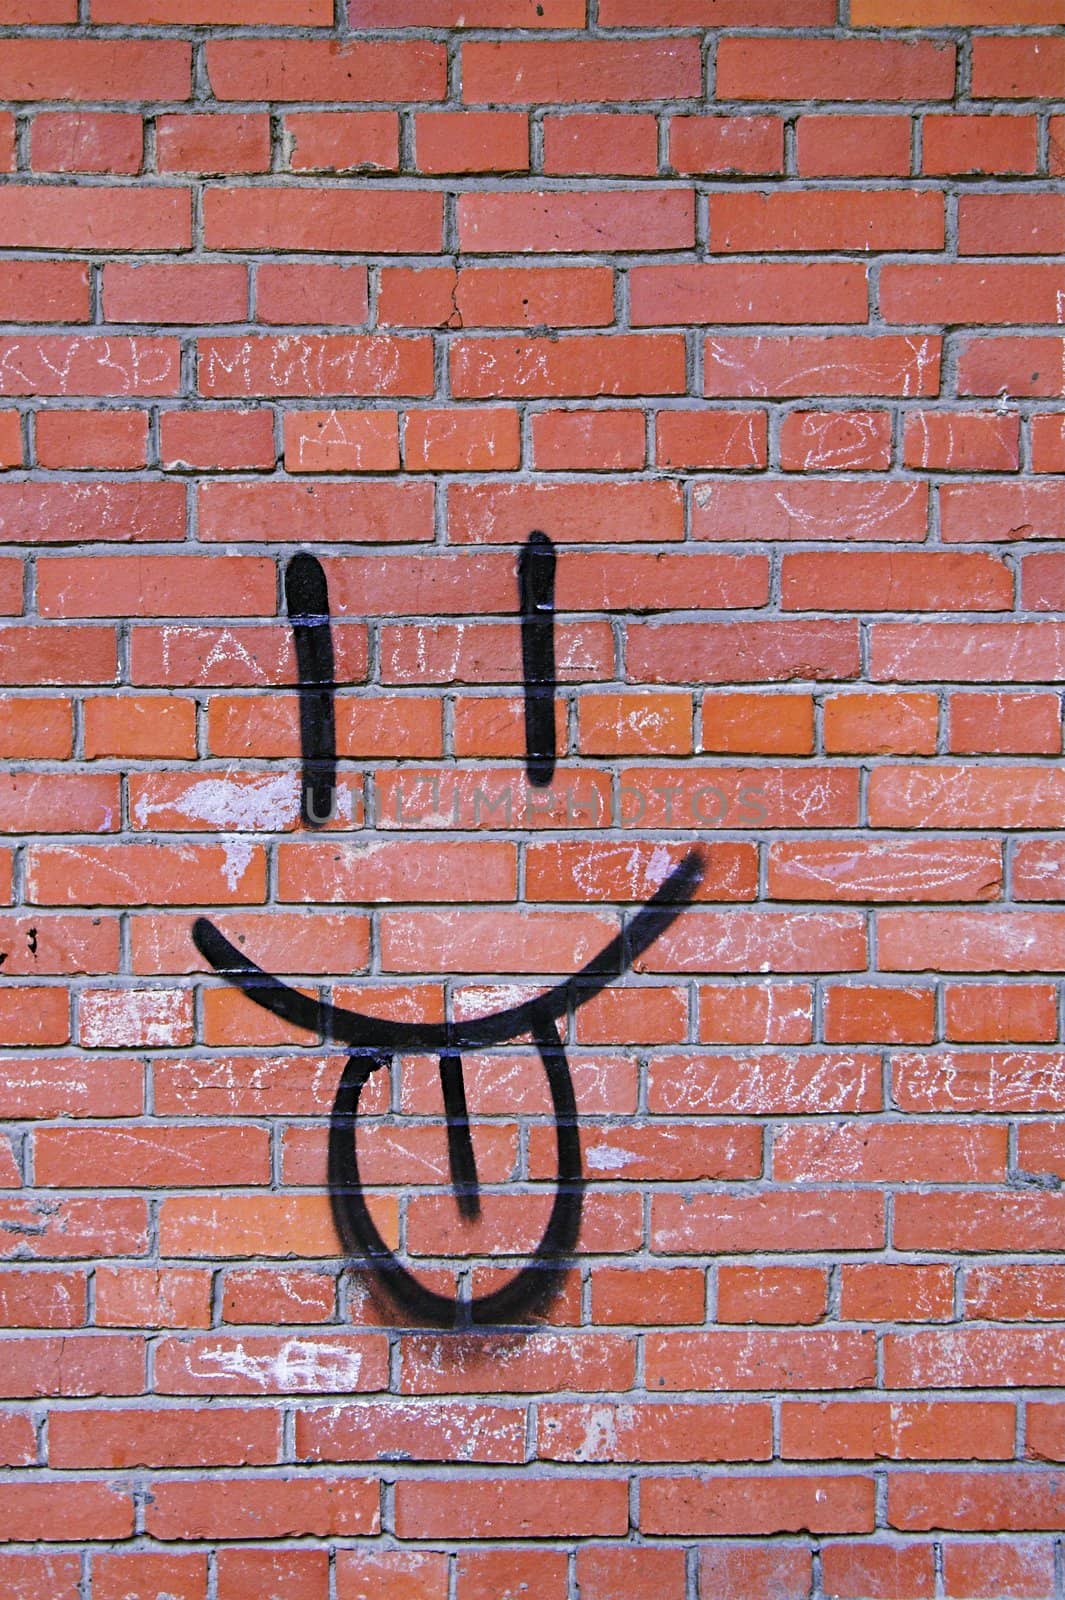 Smile Graffiti on a Red Brick Wall.